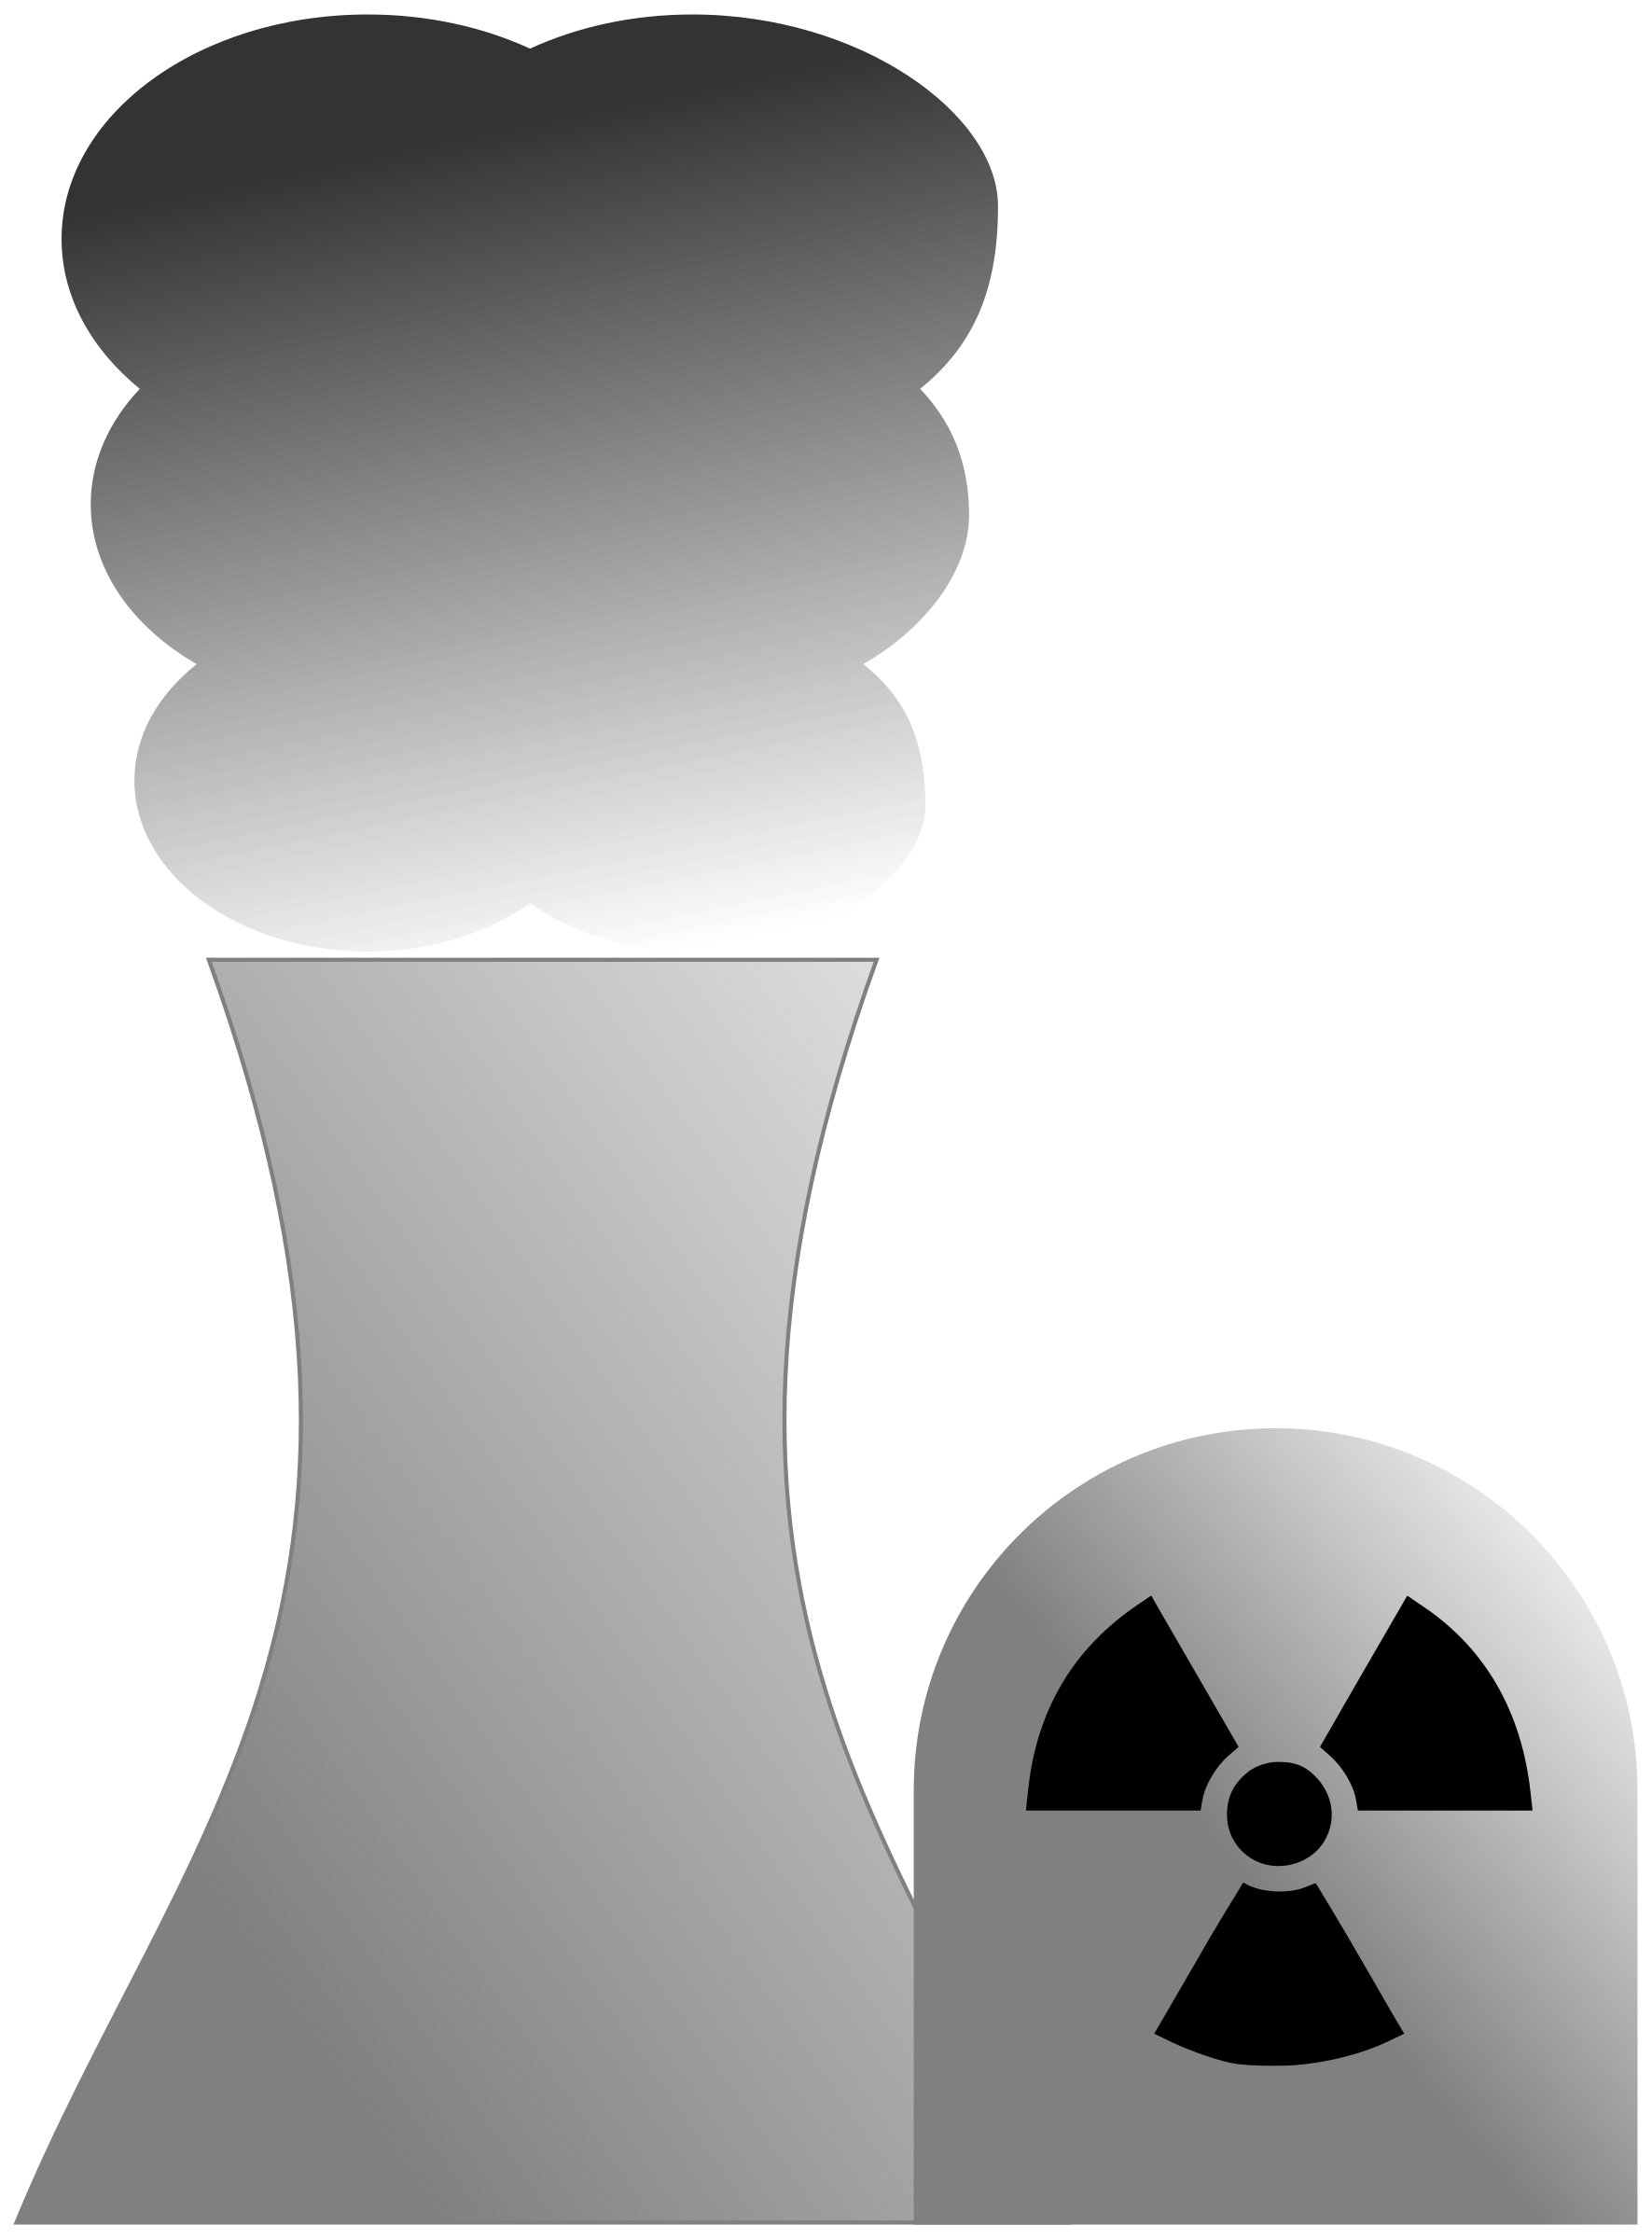 Nuclear Power Plant   Kernkraftwerk By Forestgreen